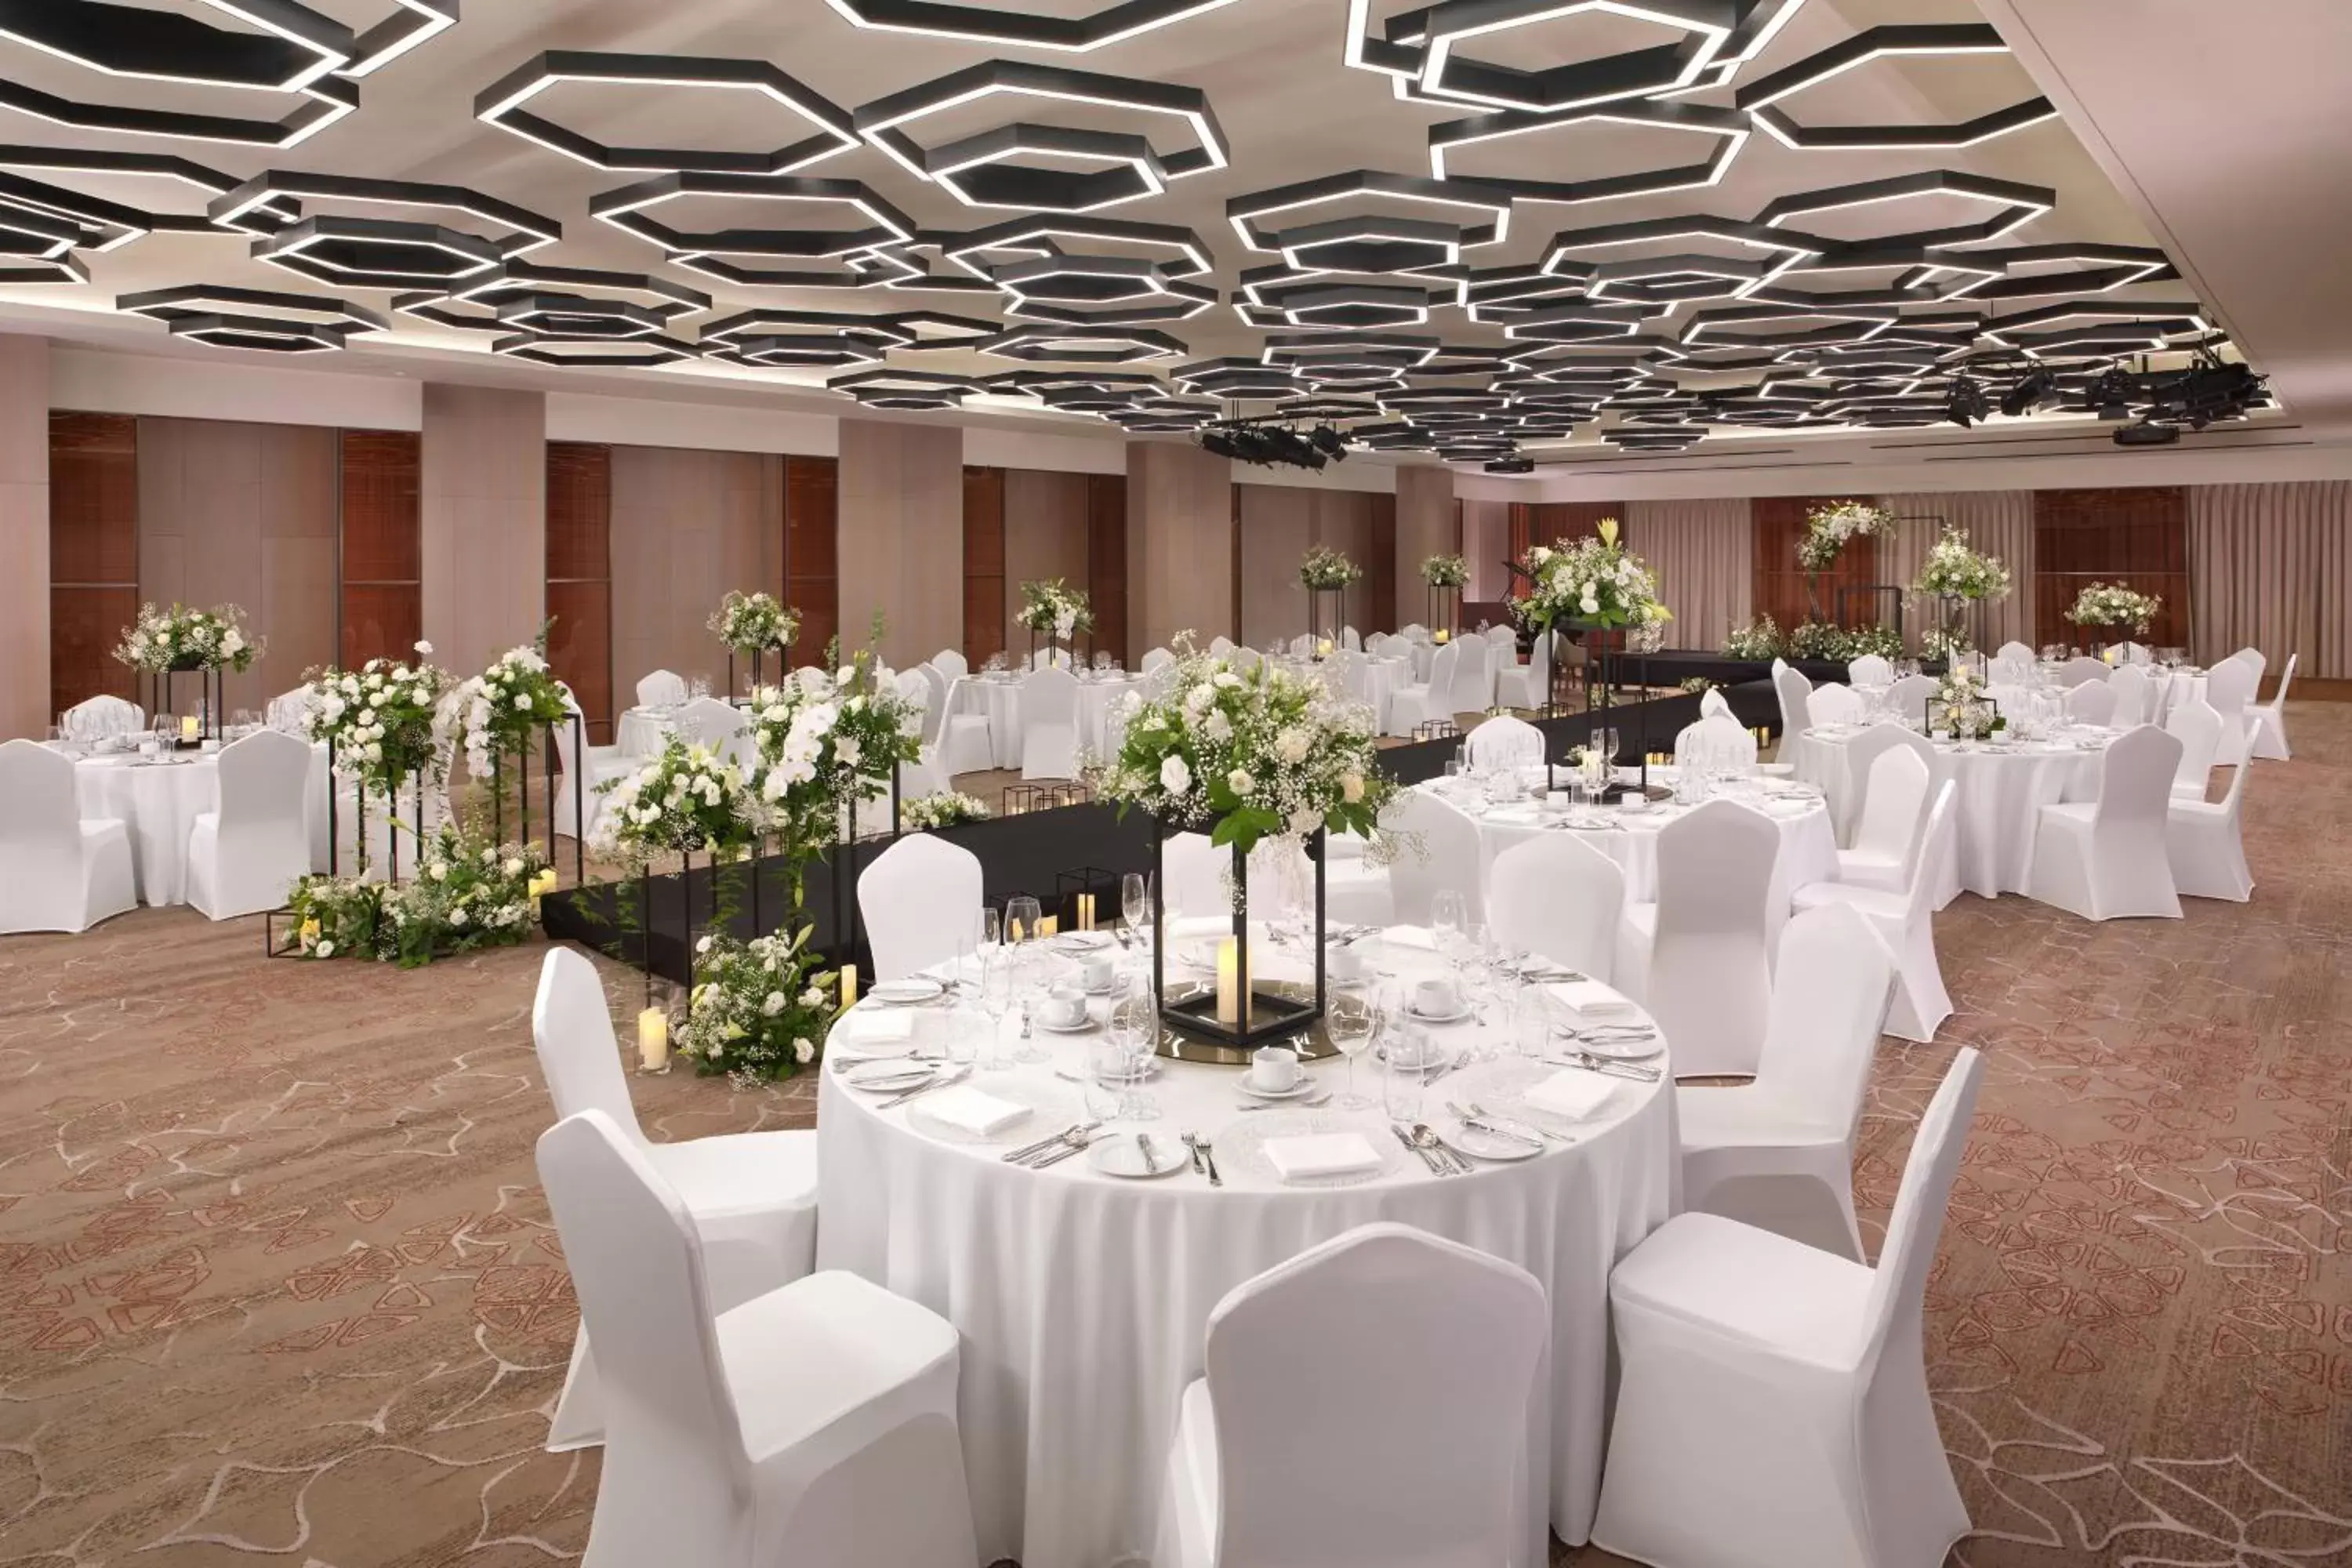 Banquet/Function facilities, Banquet Facilities in Daegu Marriott Hotel